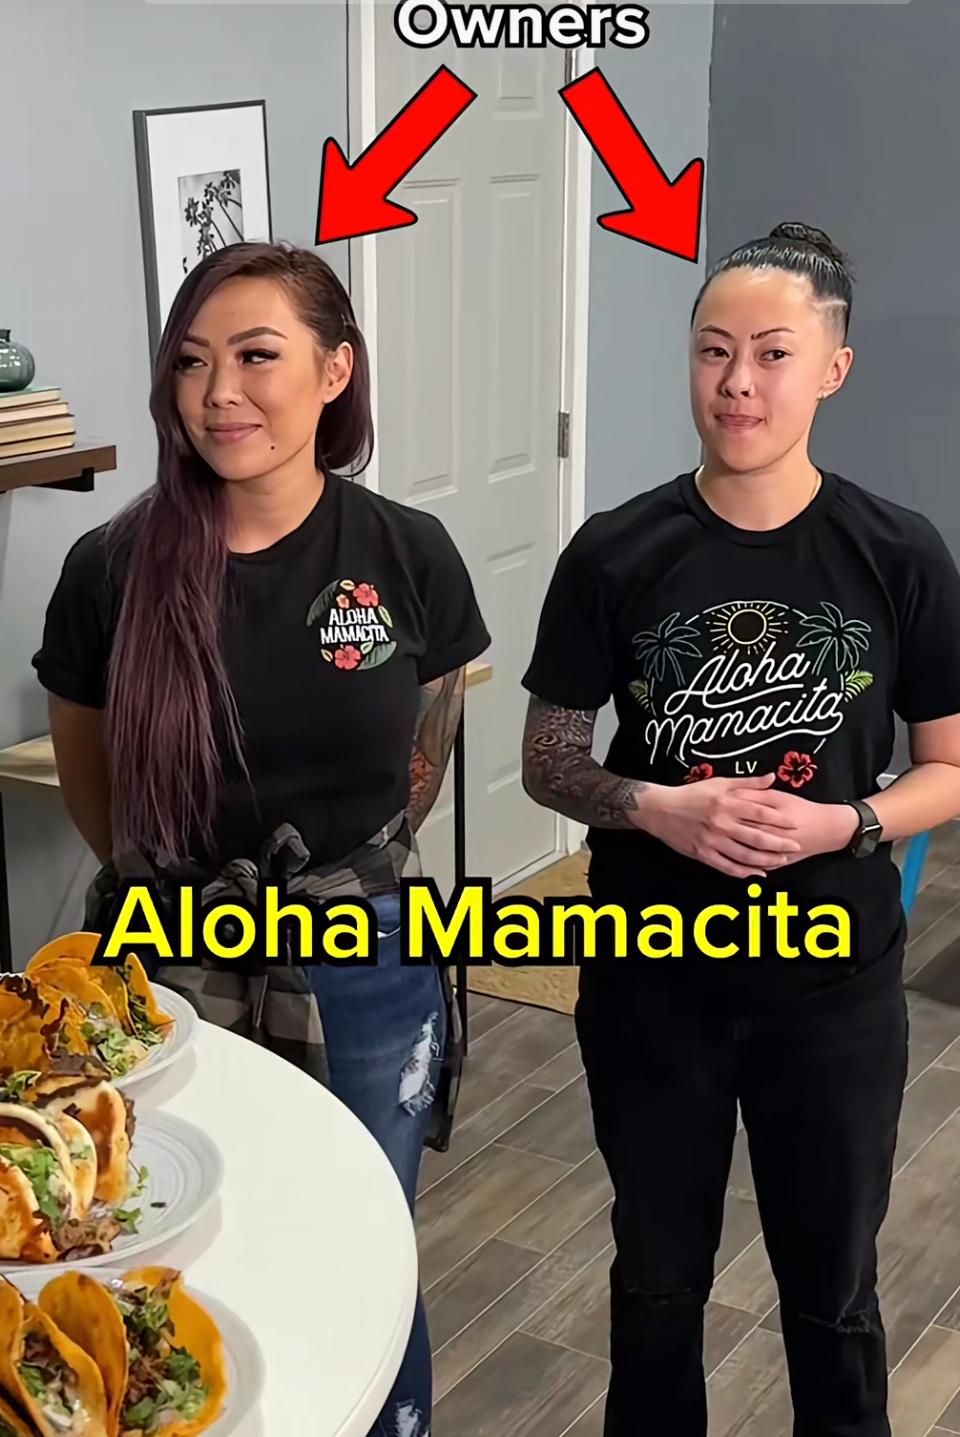 Owners of Aloha Mamacita